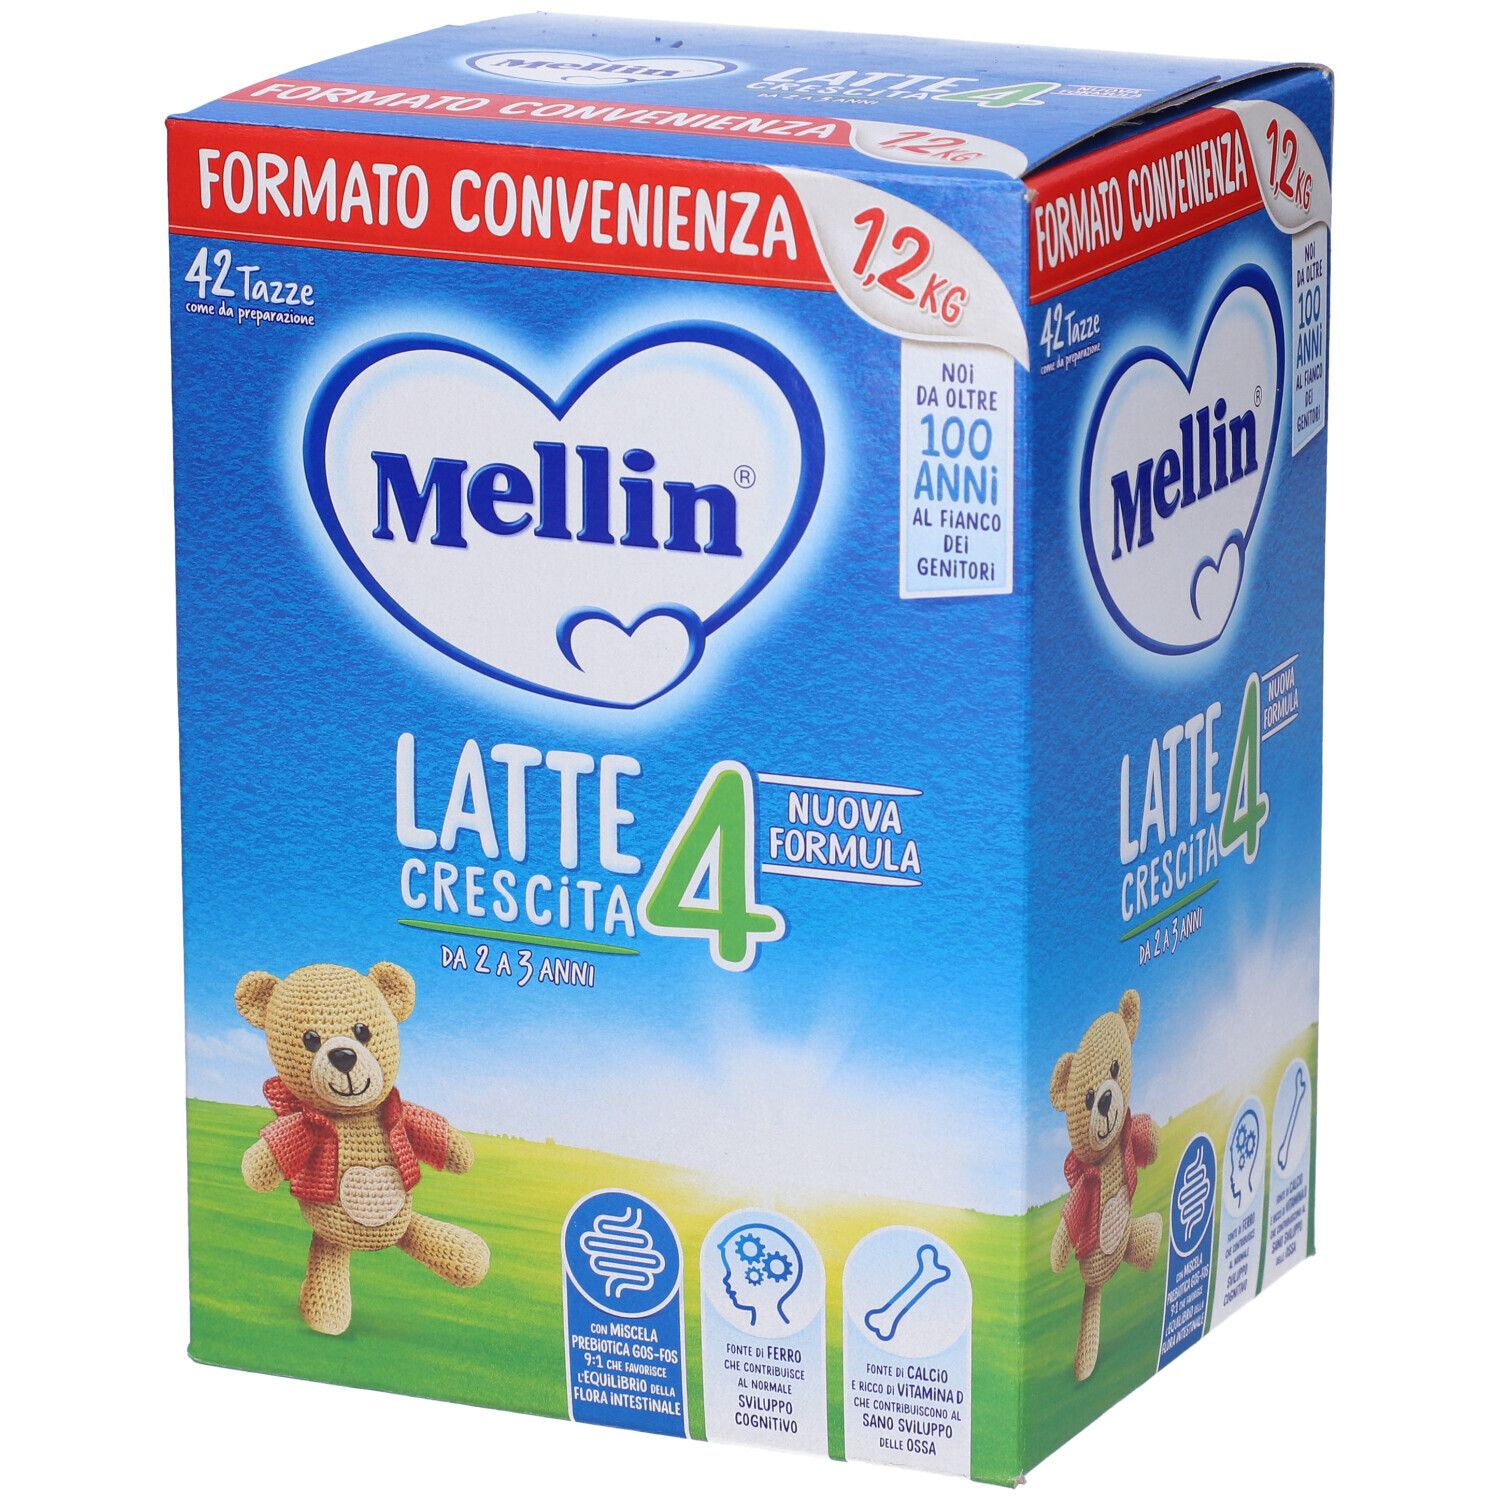 Mellin Latte Crescita 4 1,2 Kg 1200 g